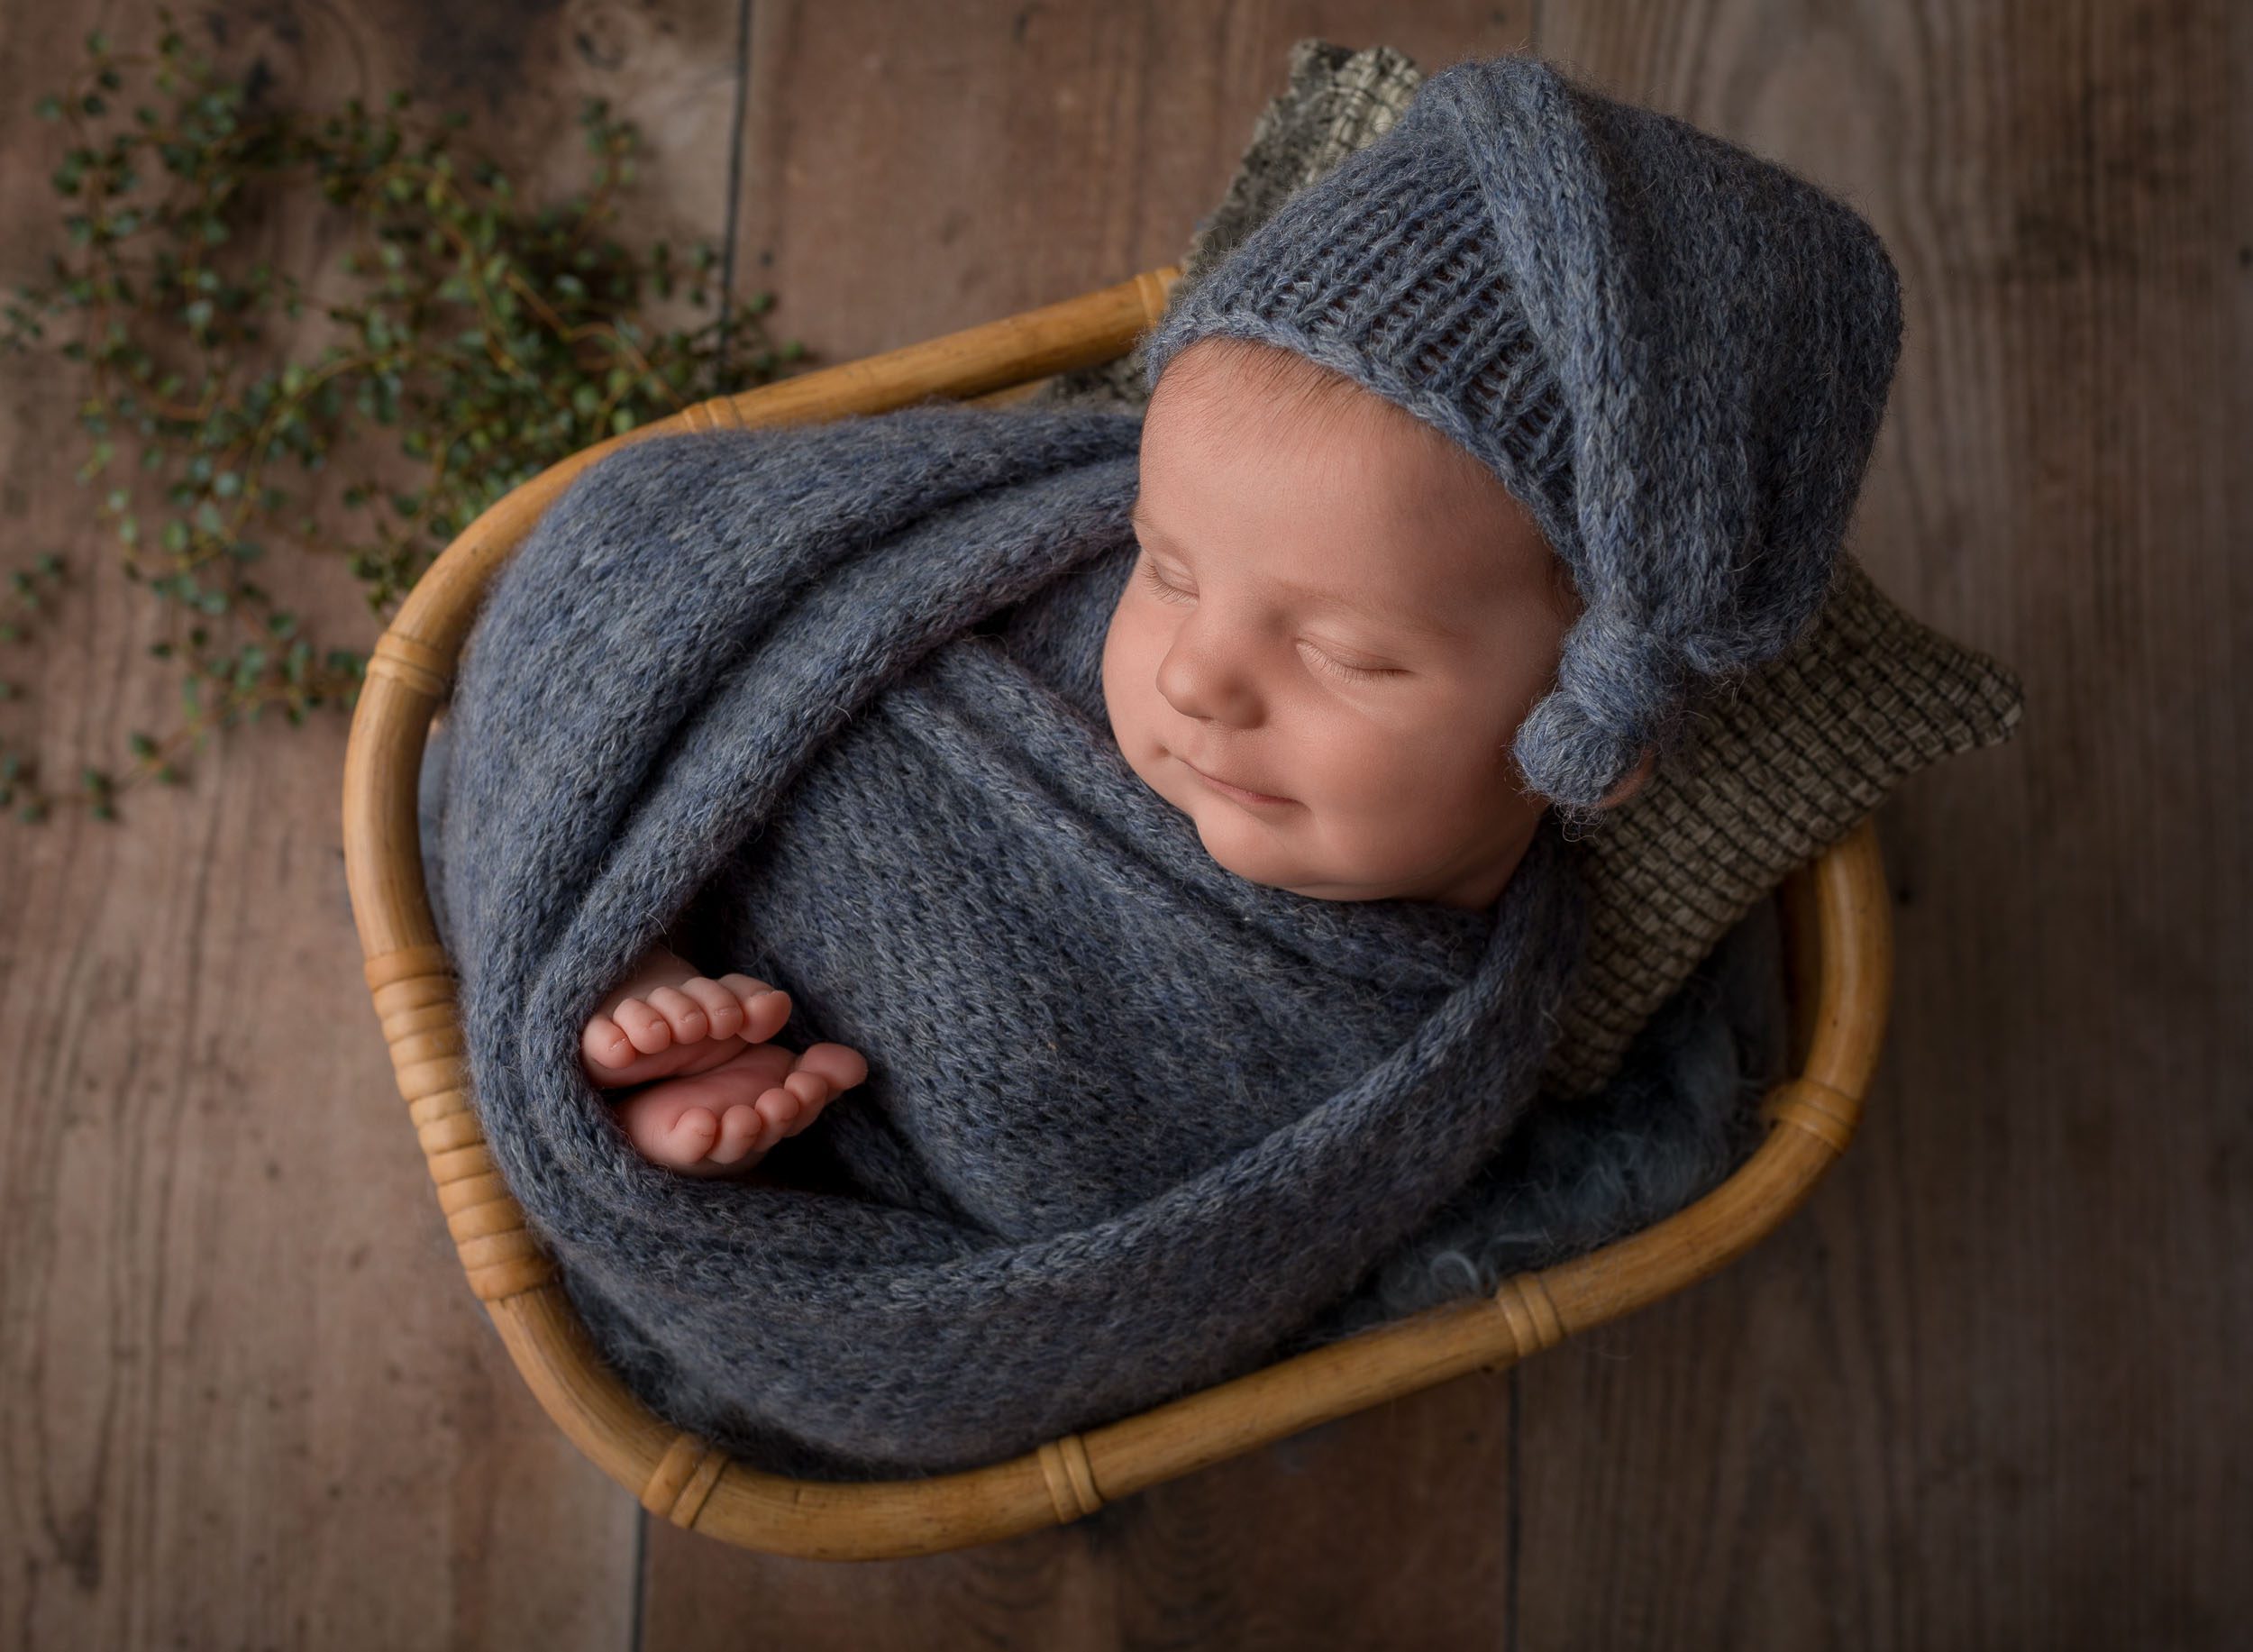 new born baby boy wrapped in blue wearing knit hat in basket